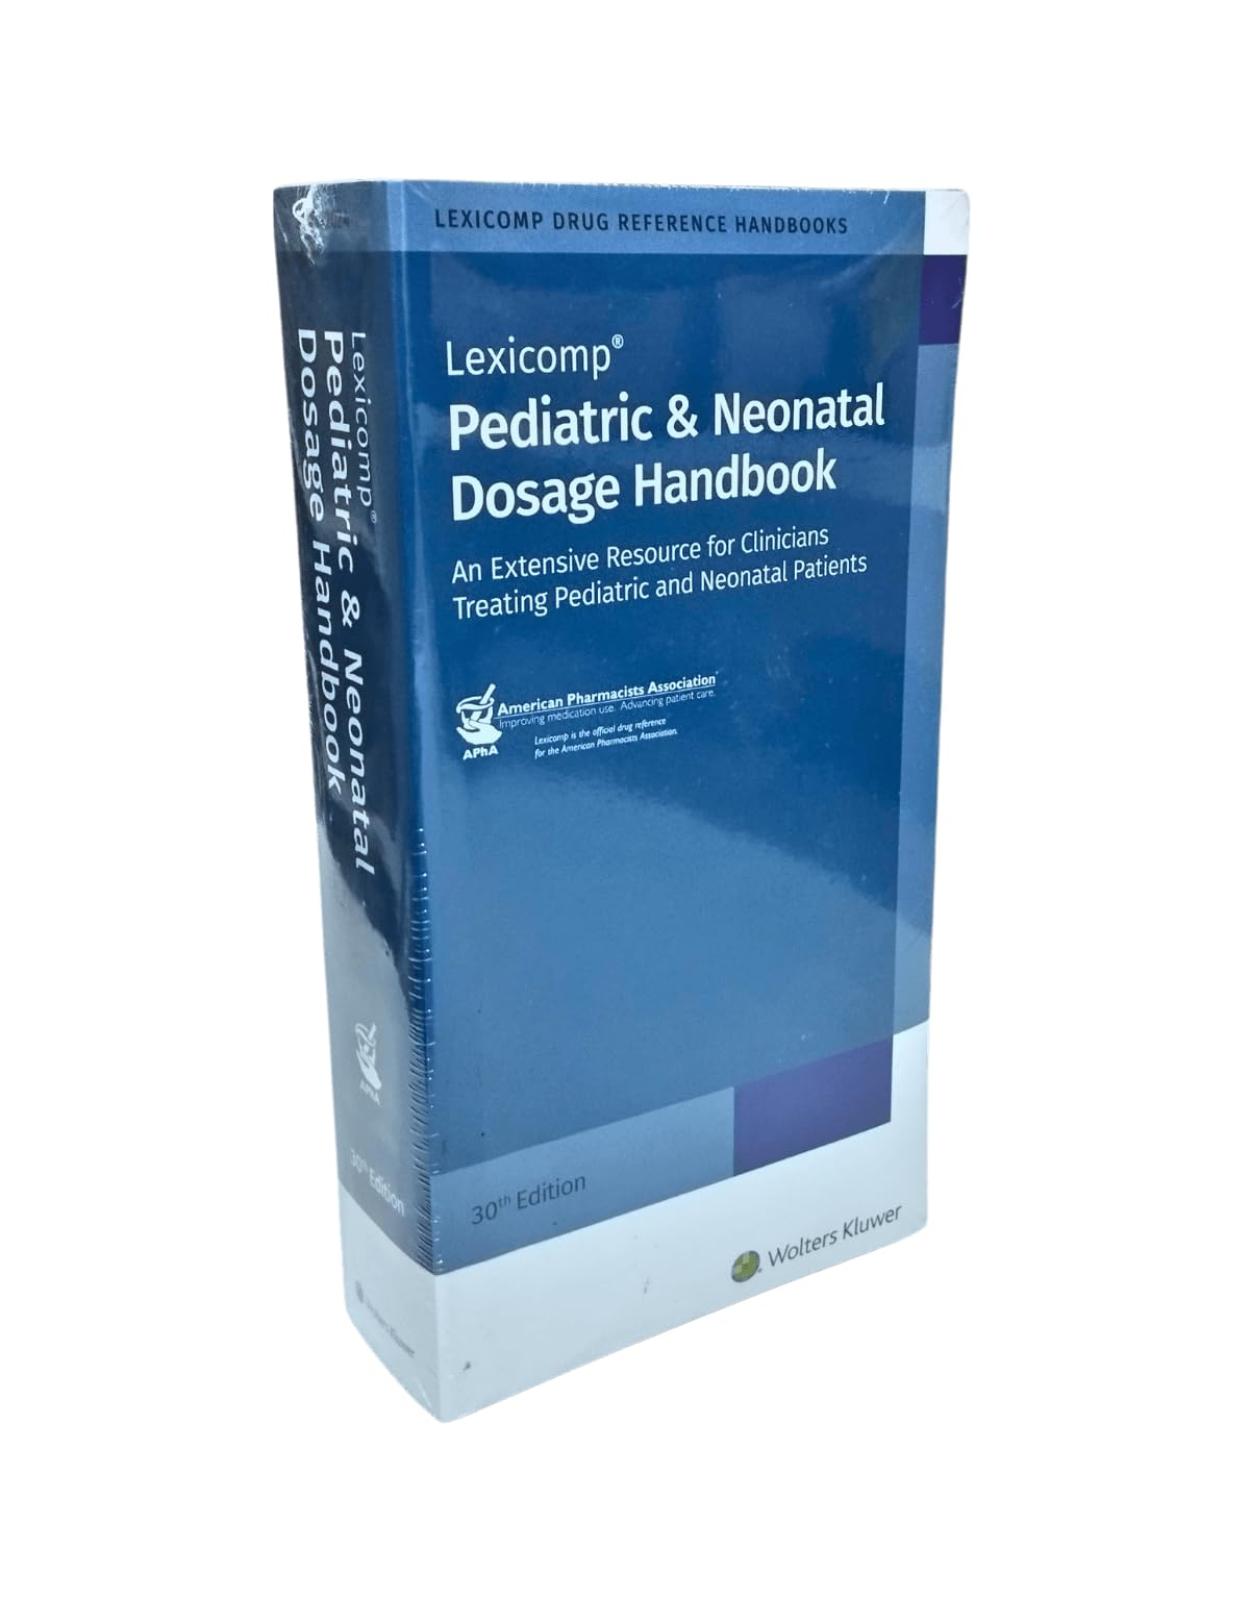  Lexicomp Pediatric & Neonatal Dosage Handbook